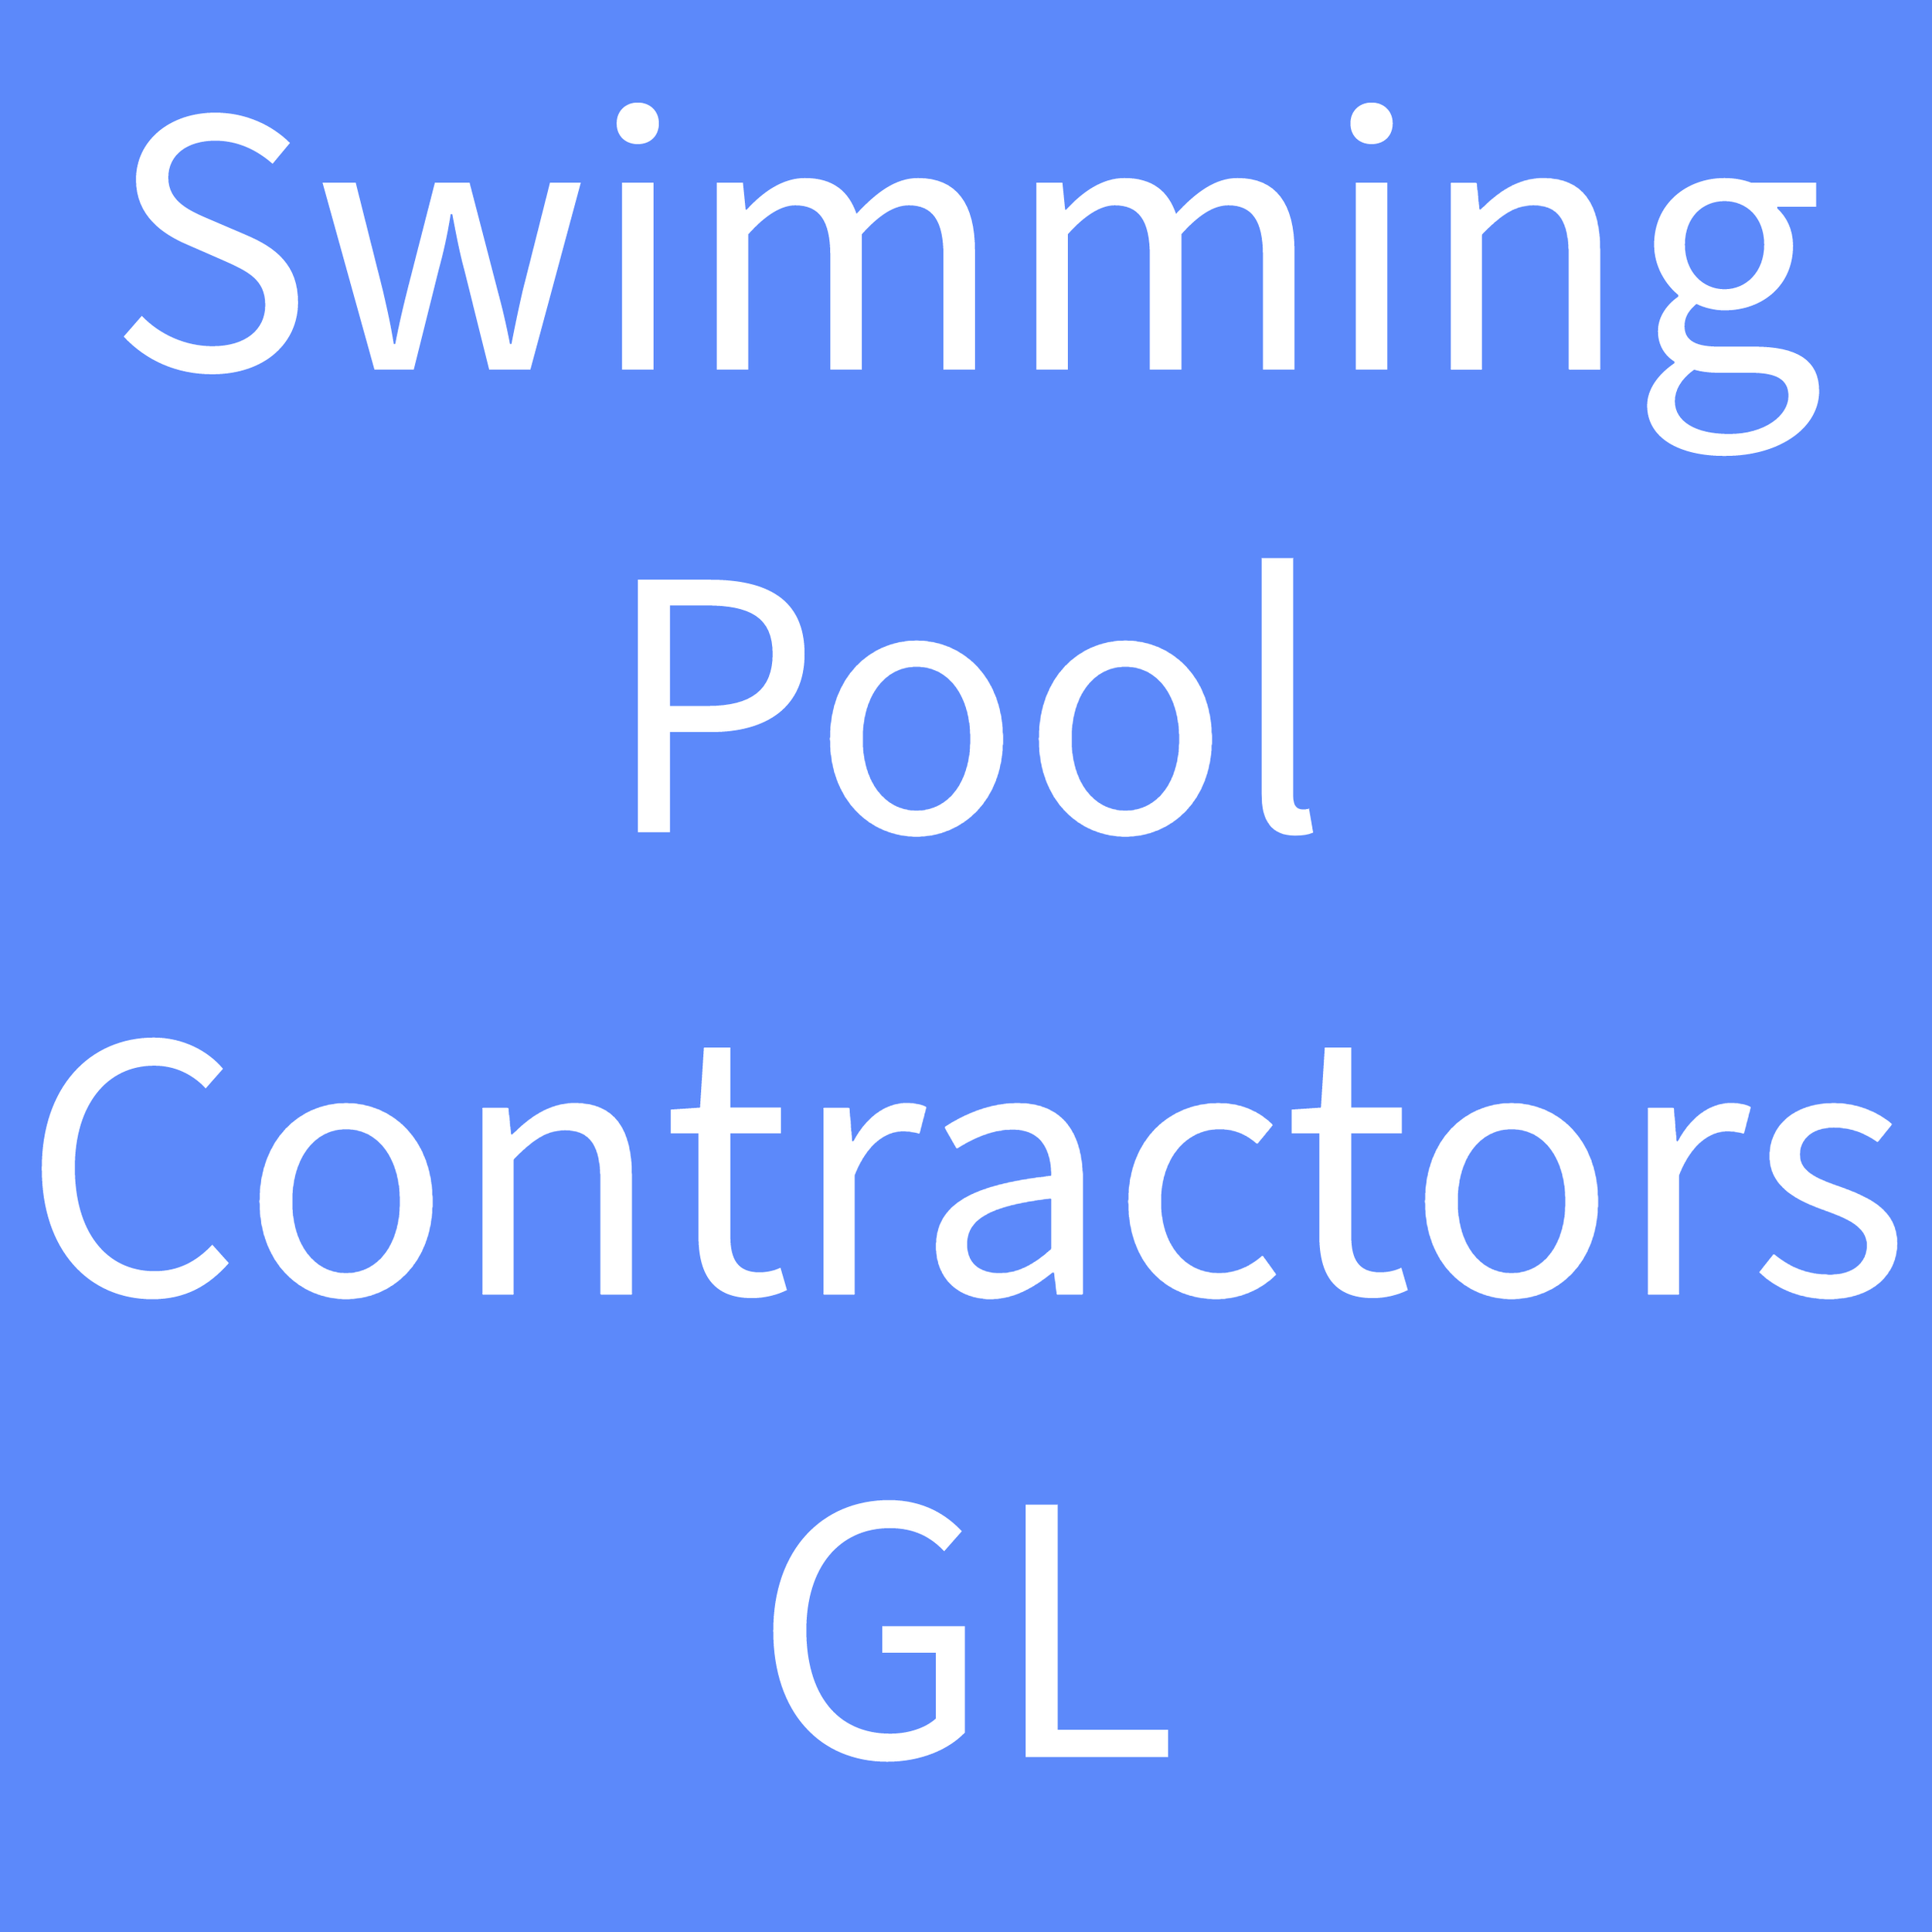 Swimming Pool Contractors GL